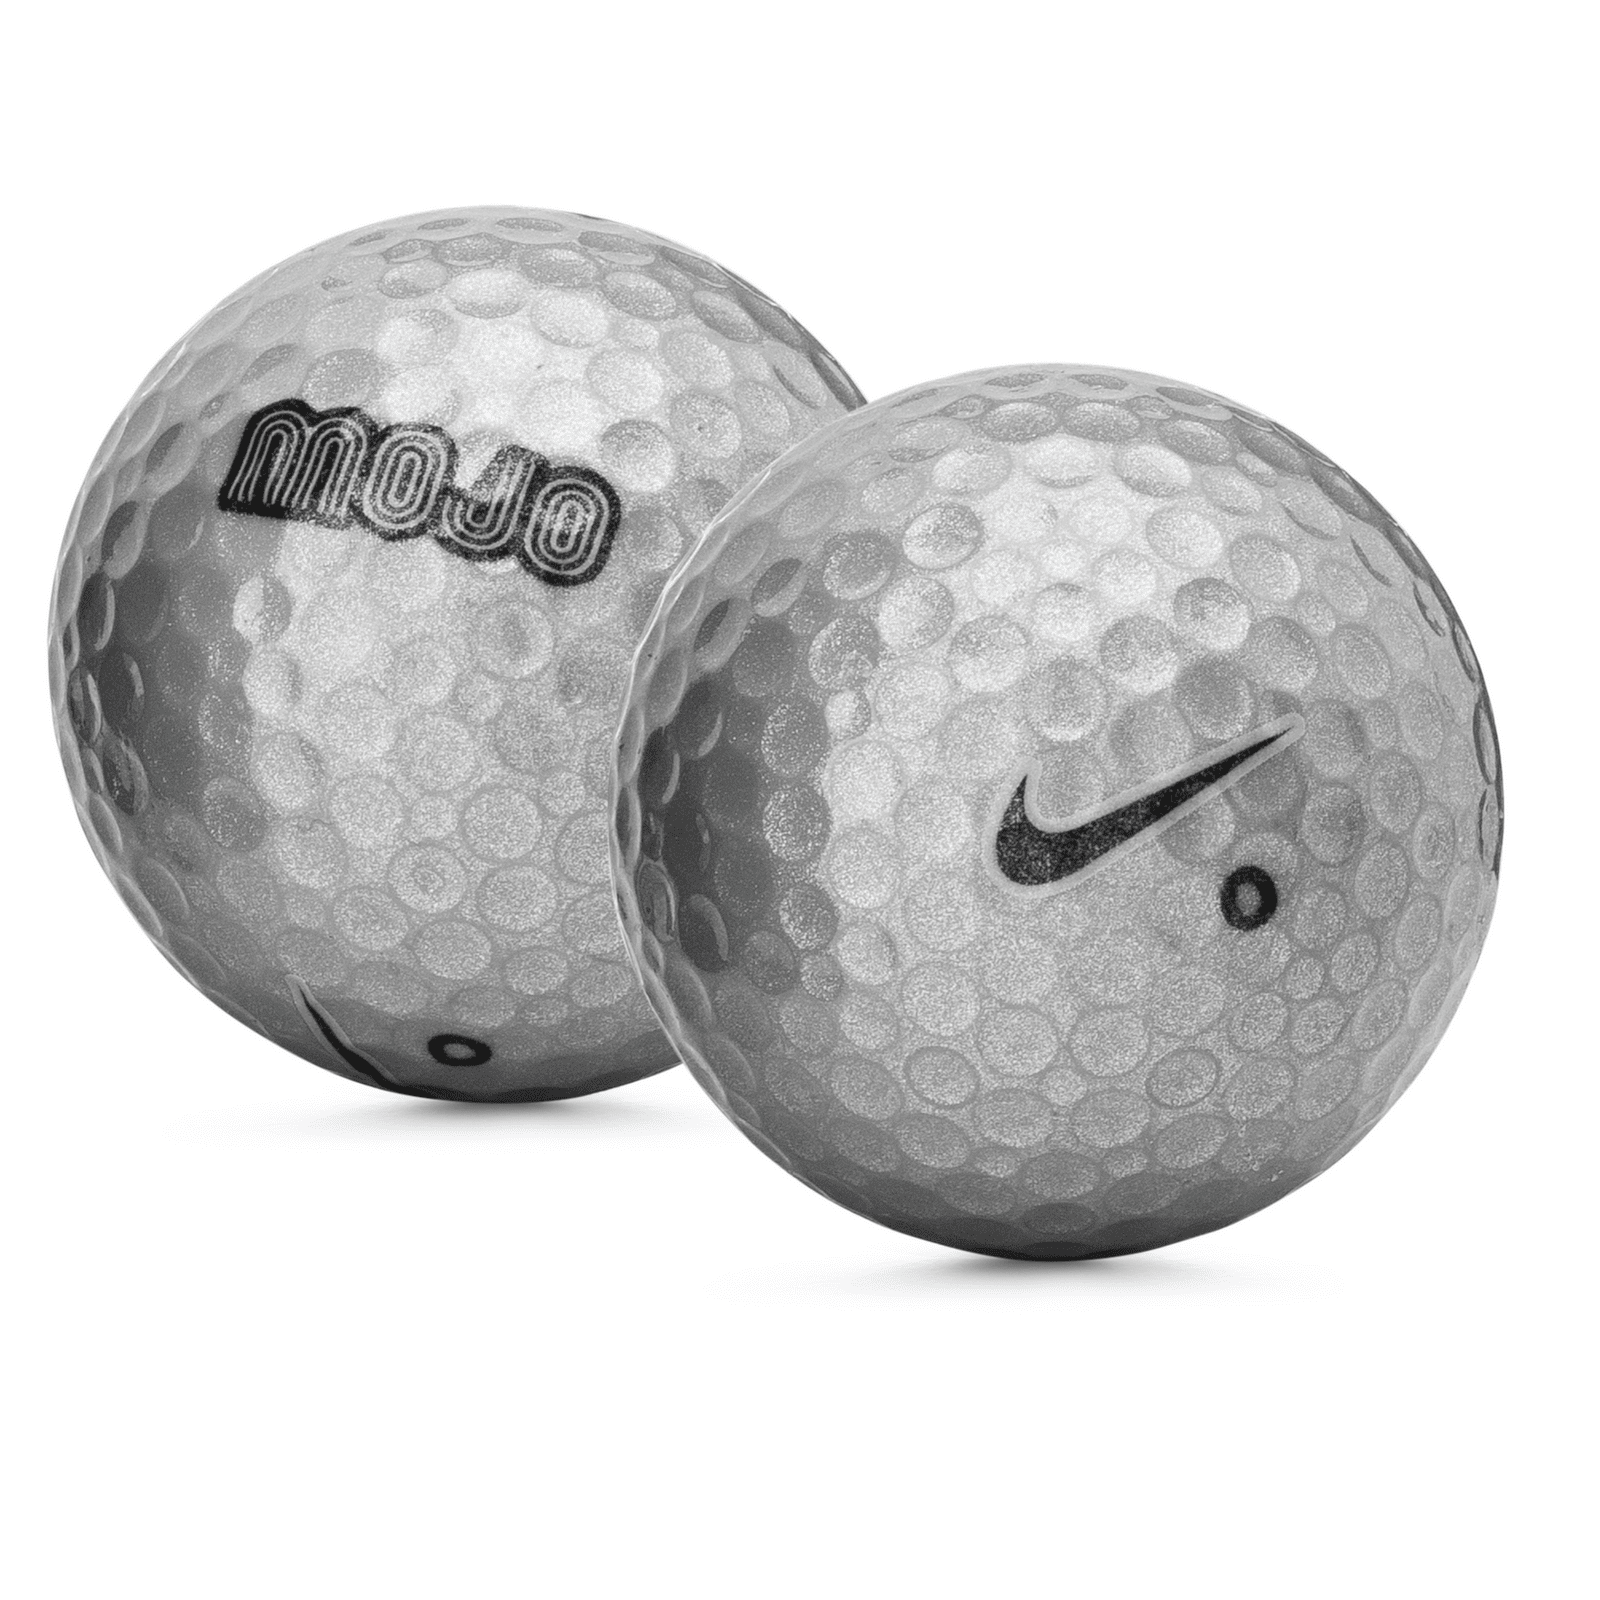 Nike Karma Mojo Near Mint Recycled Used Golf Balls, Silver - 48 Count -  Walmart.com